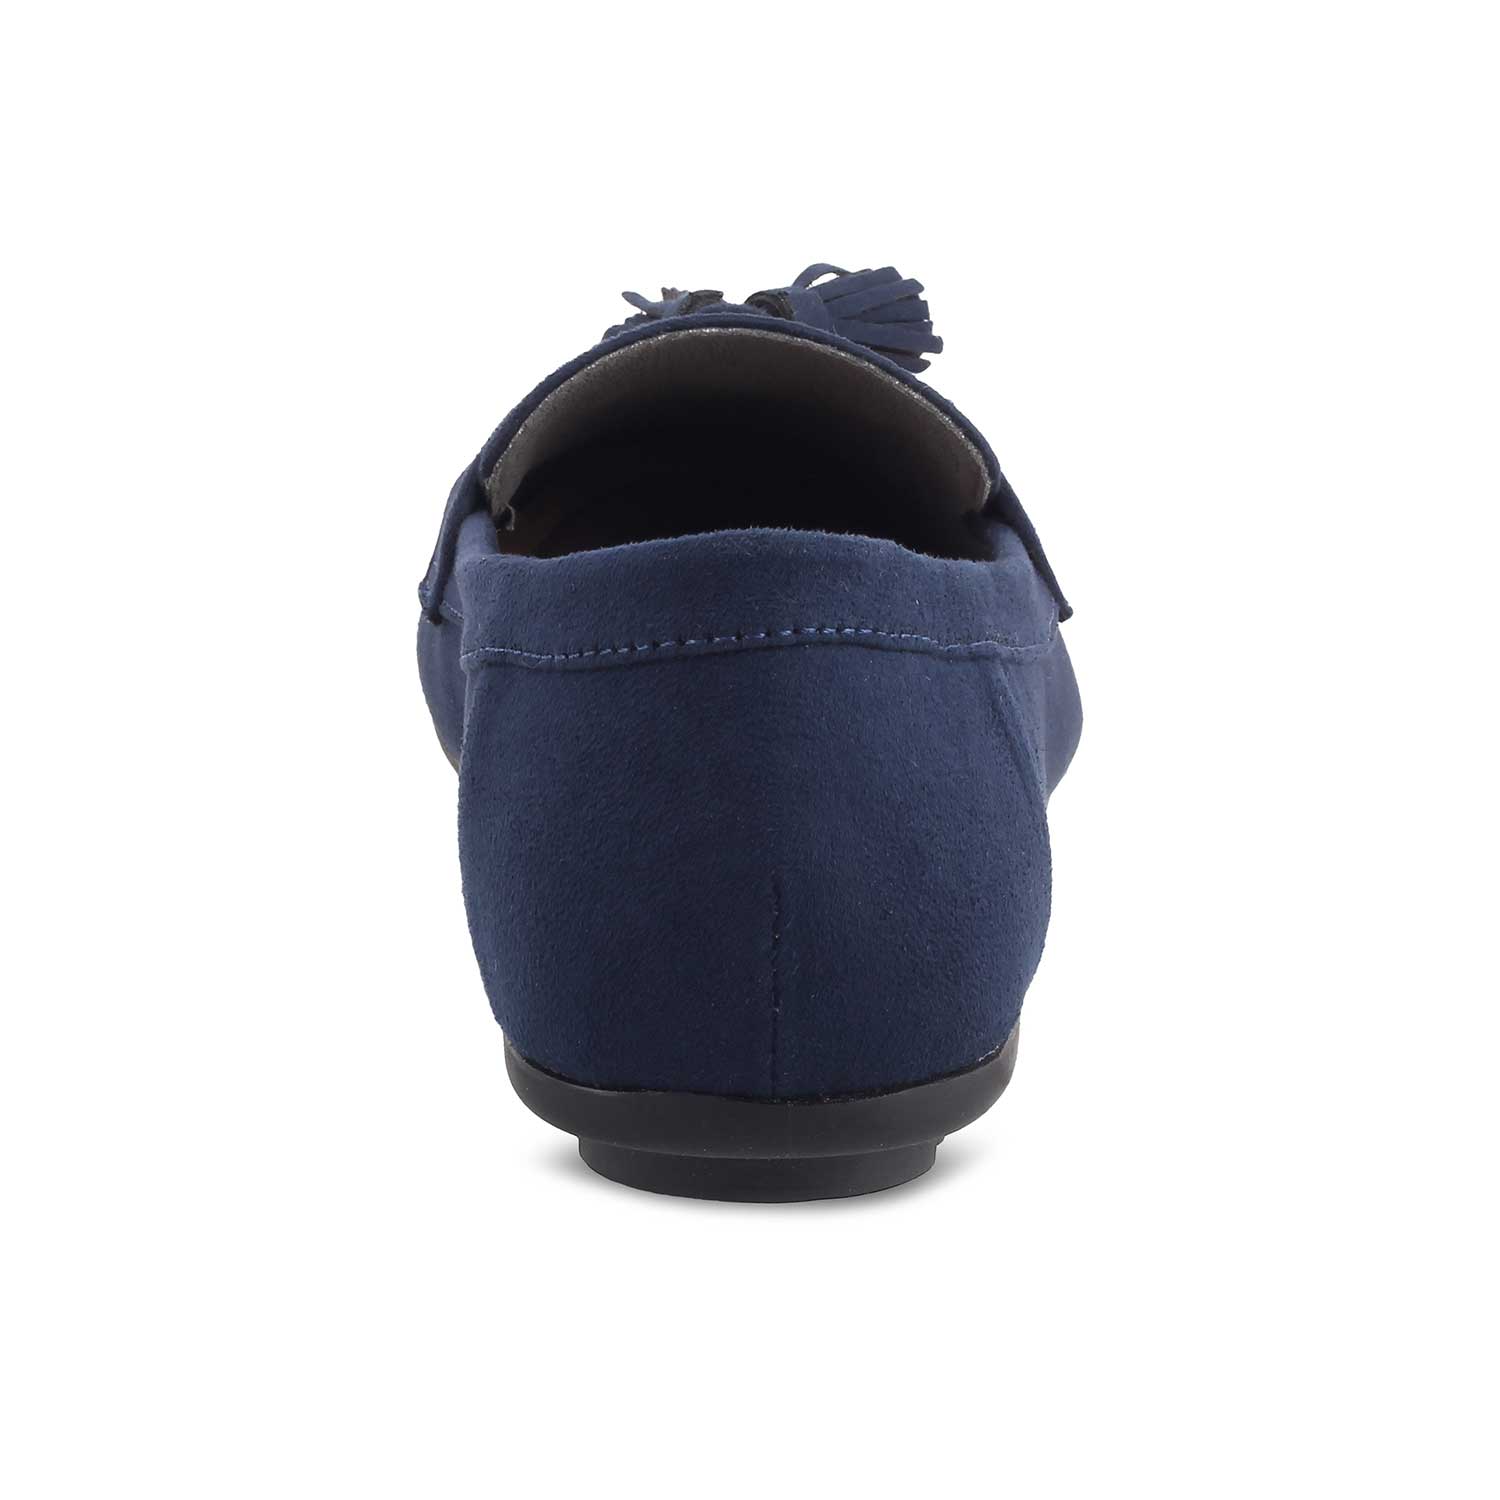 The Bonum Blue Women's Dress Tassel Loafers Tresmode - Tresmode